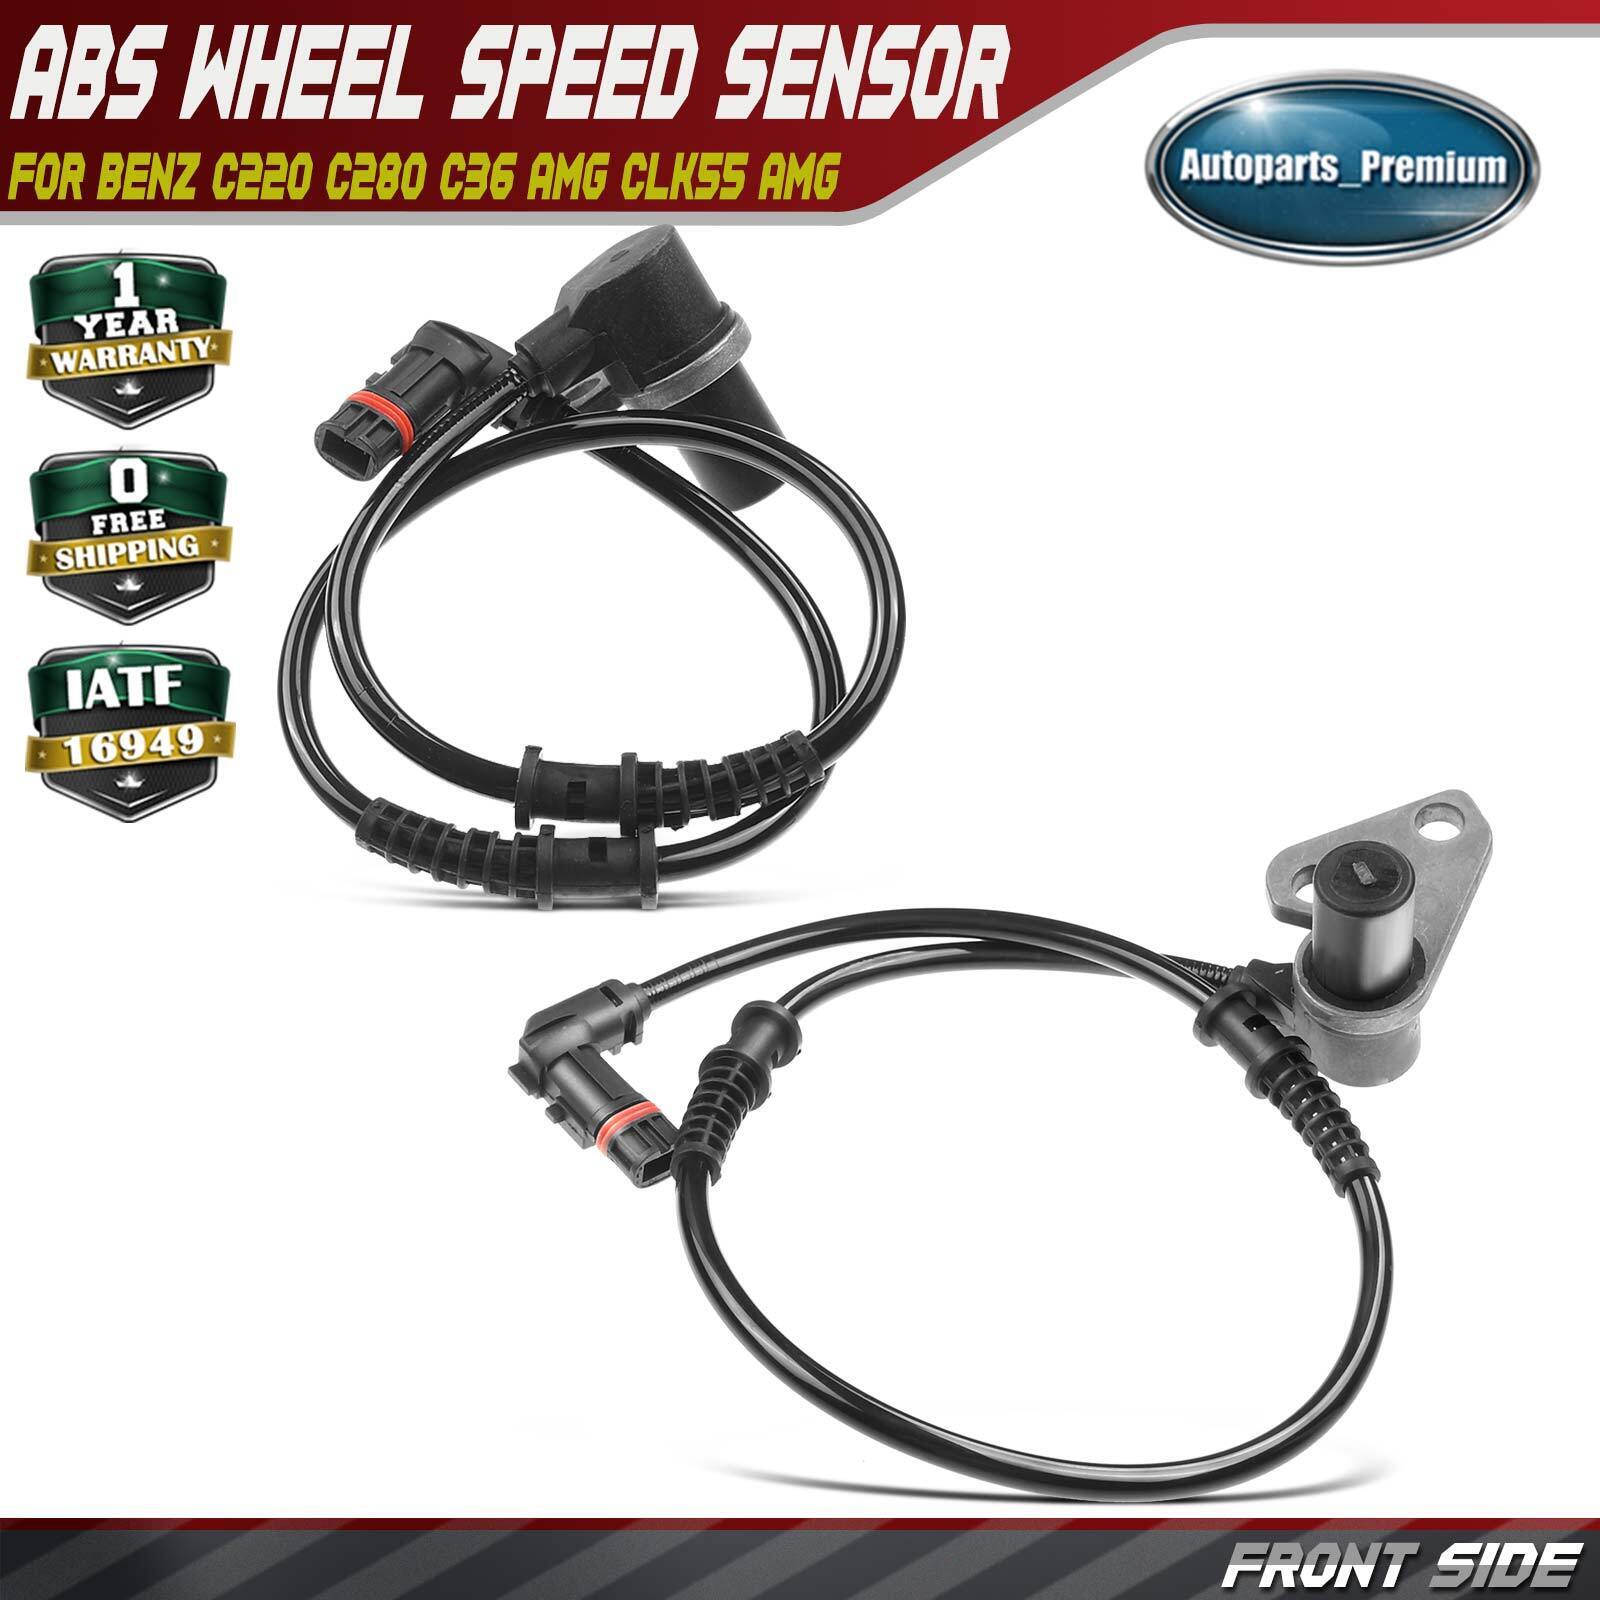 Front Side ABS Wheel Speed Sensor for Mercedes-Benz C220 C280 C36 AMG CLK55 AMG